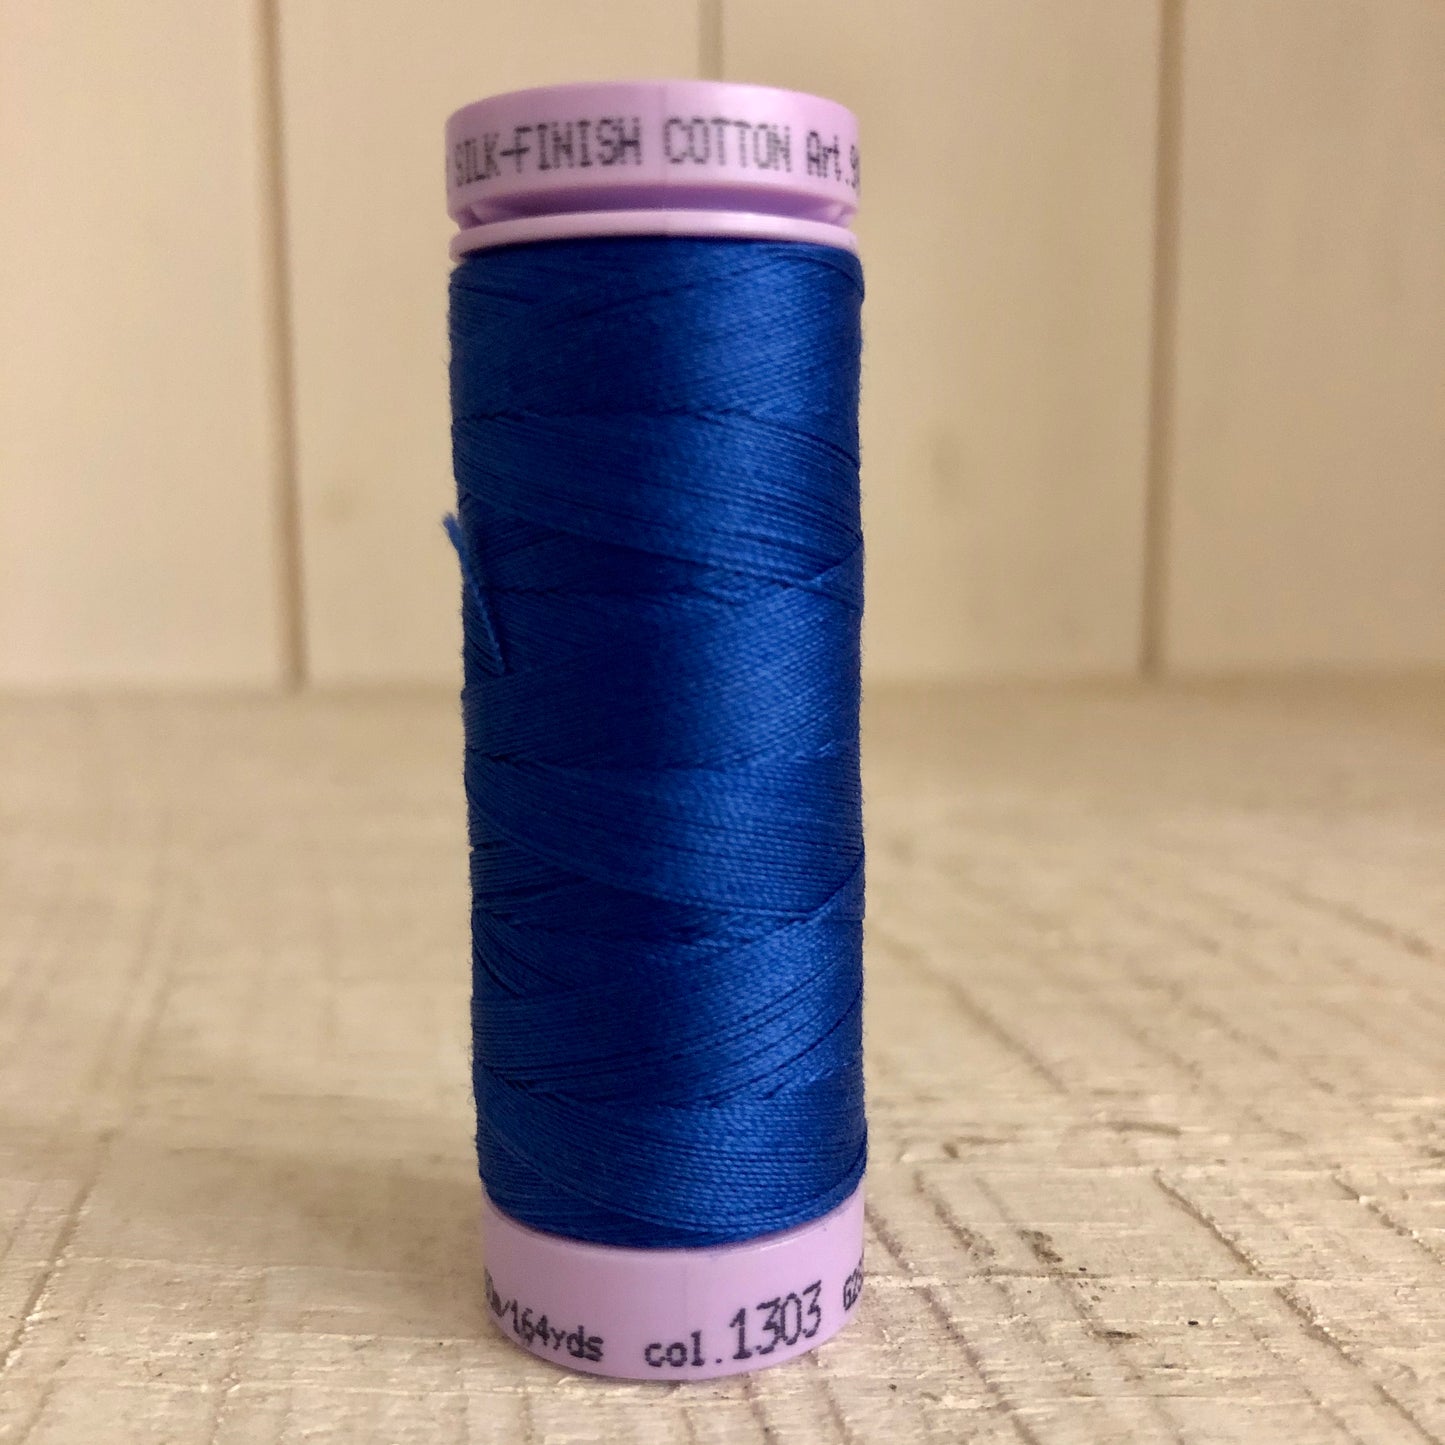 Mettler Silk Finish Cotton Thread, Royal Blue 1303, 150 meter Spool